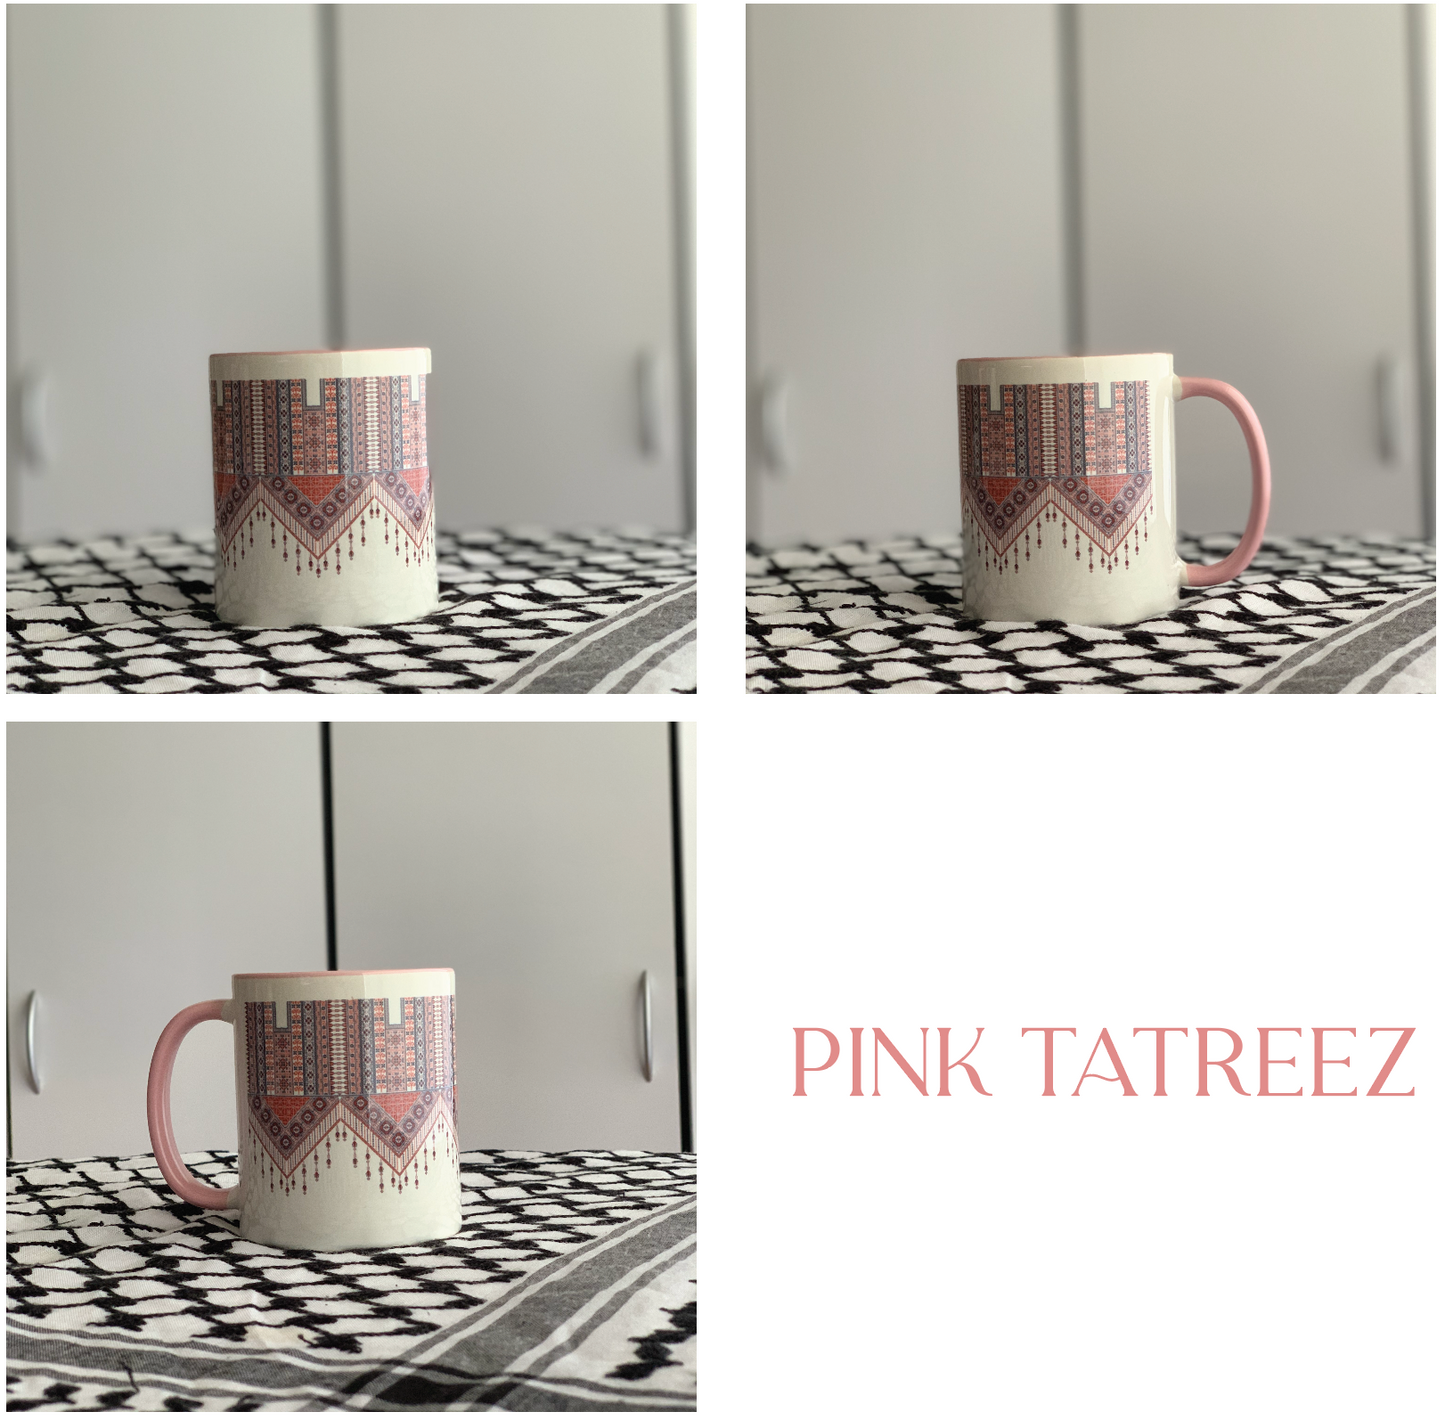 Palestine Ceramic Mug